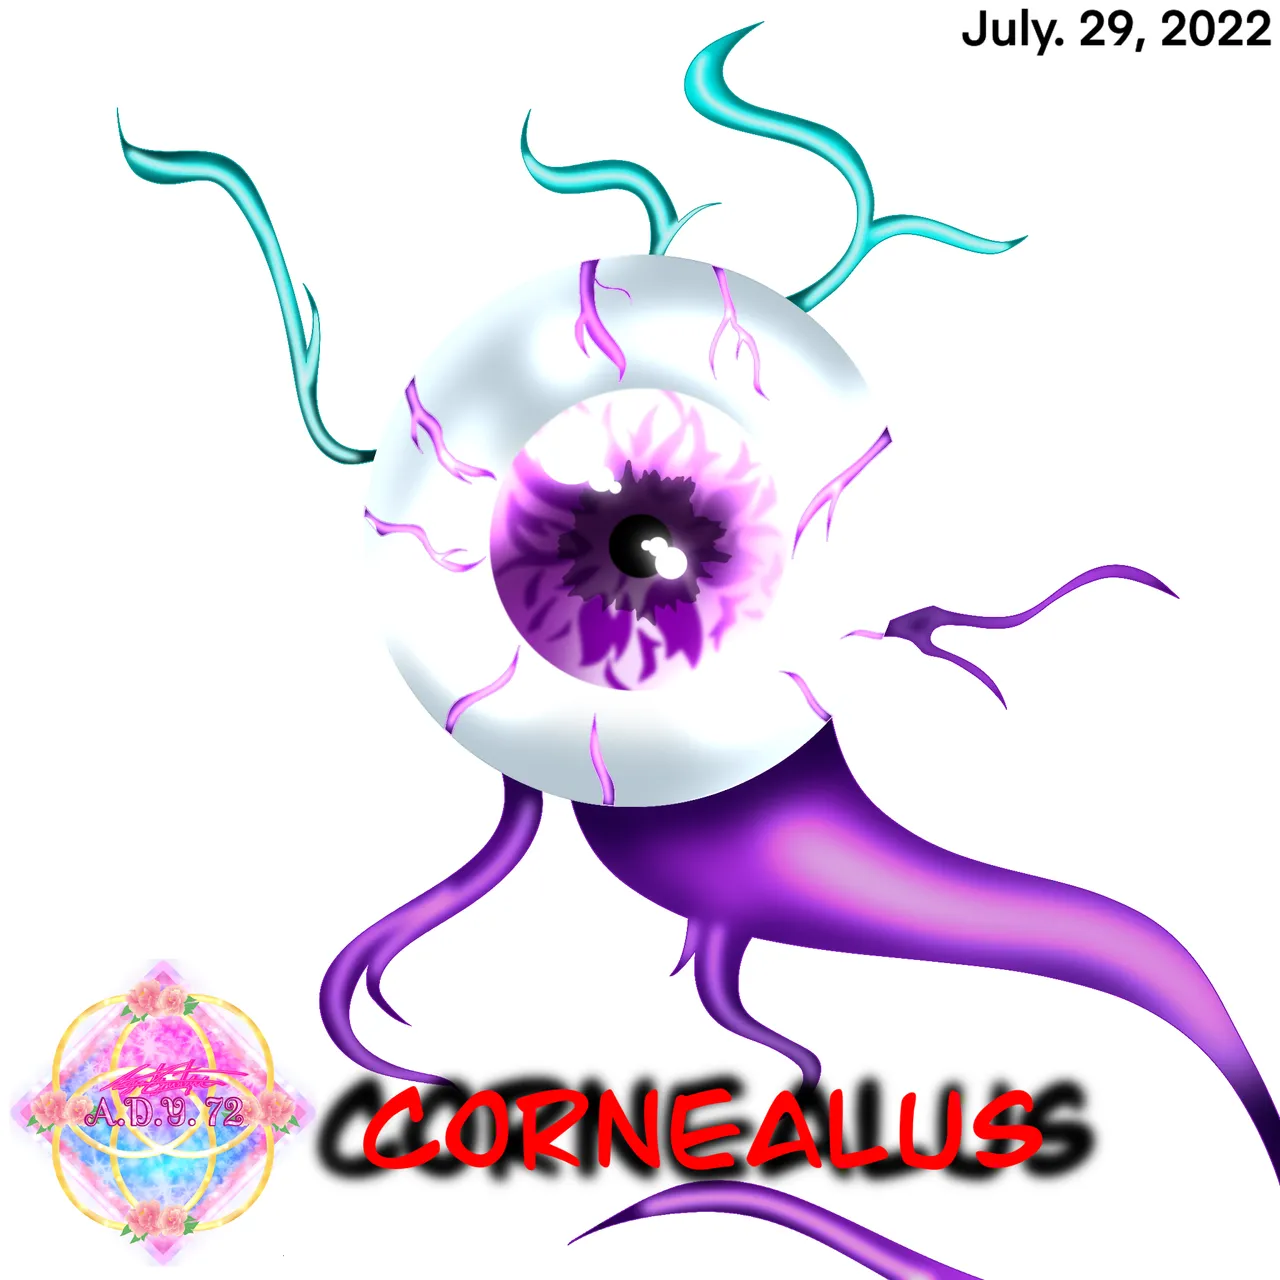 Cornealus (1).png